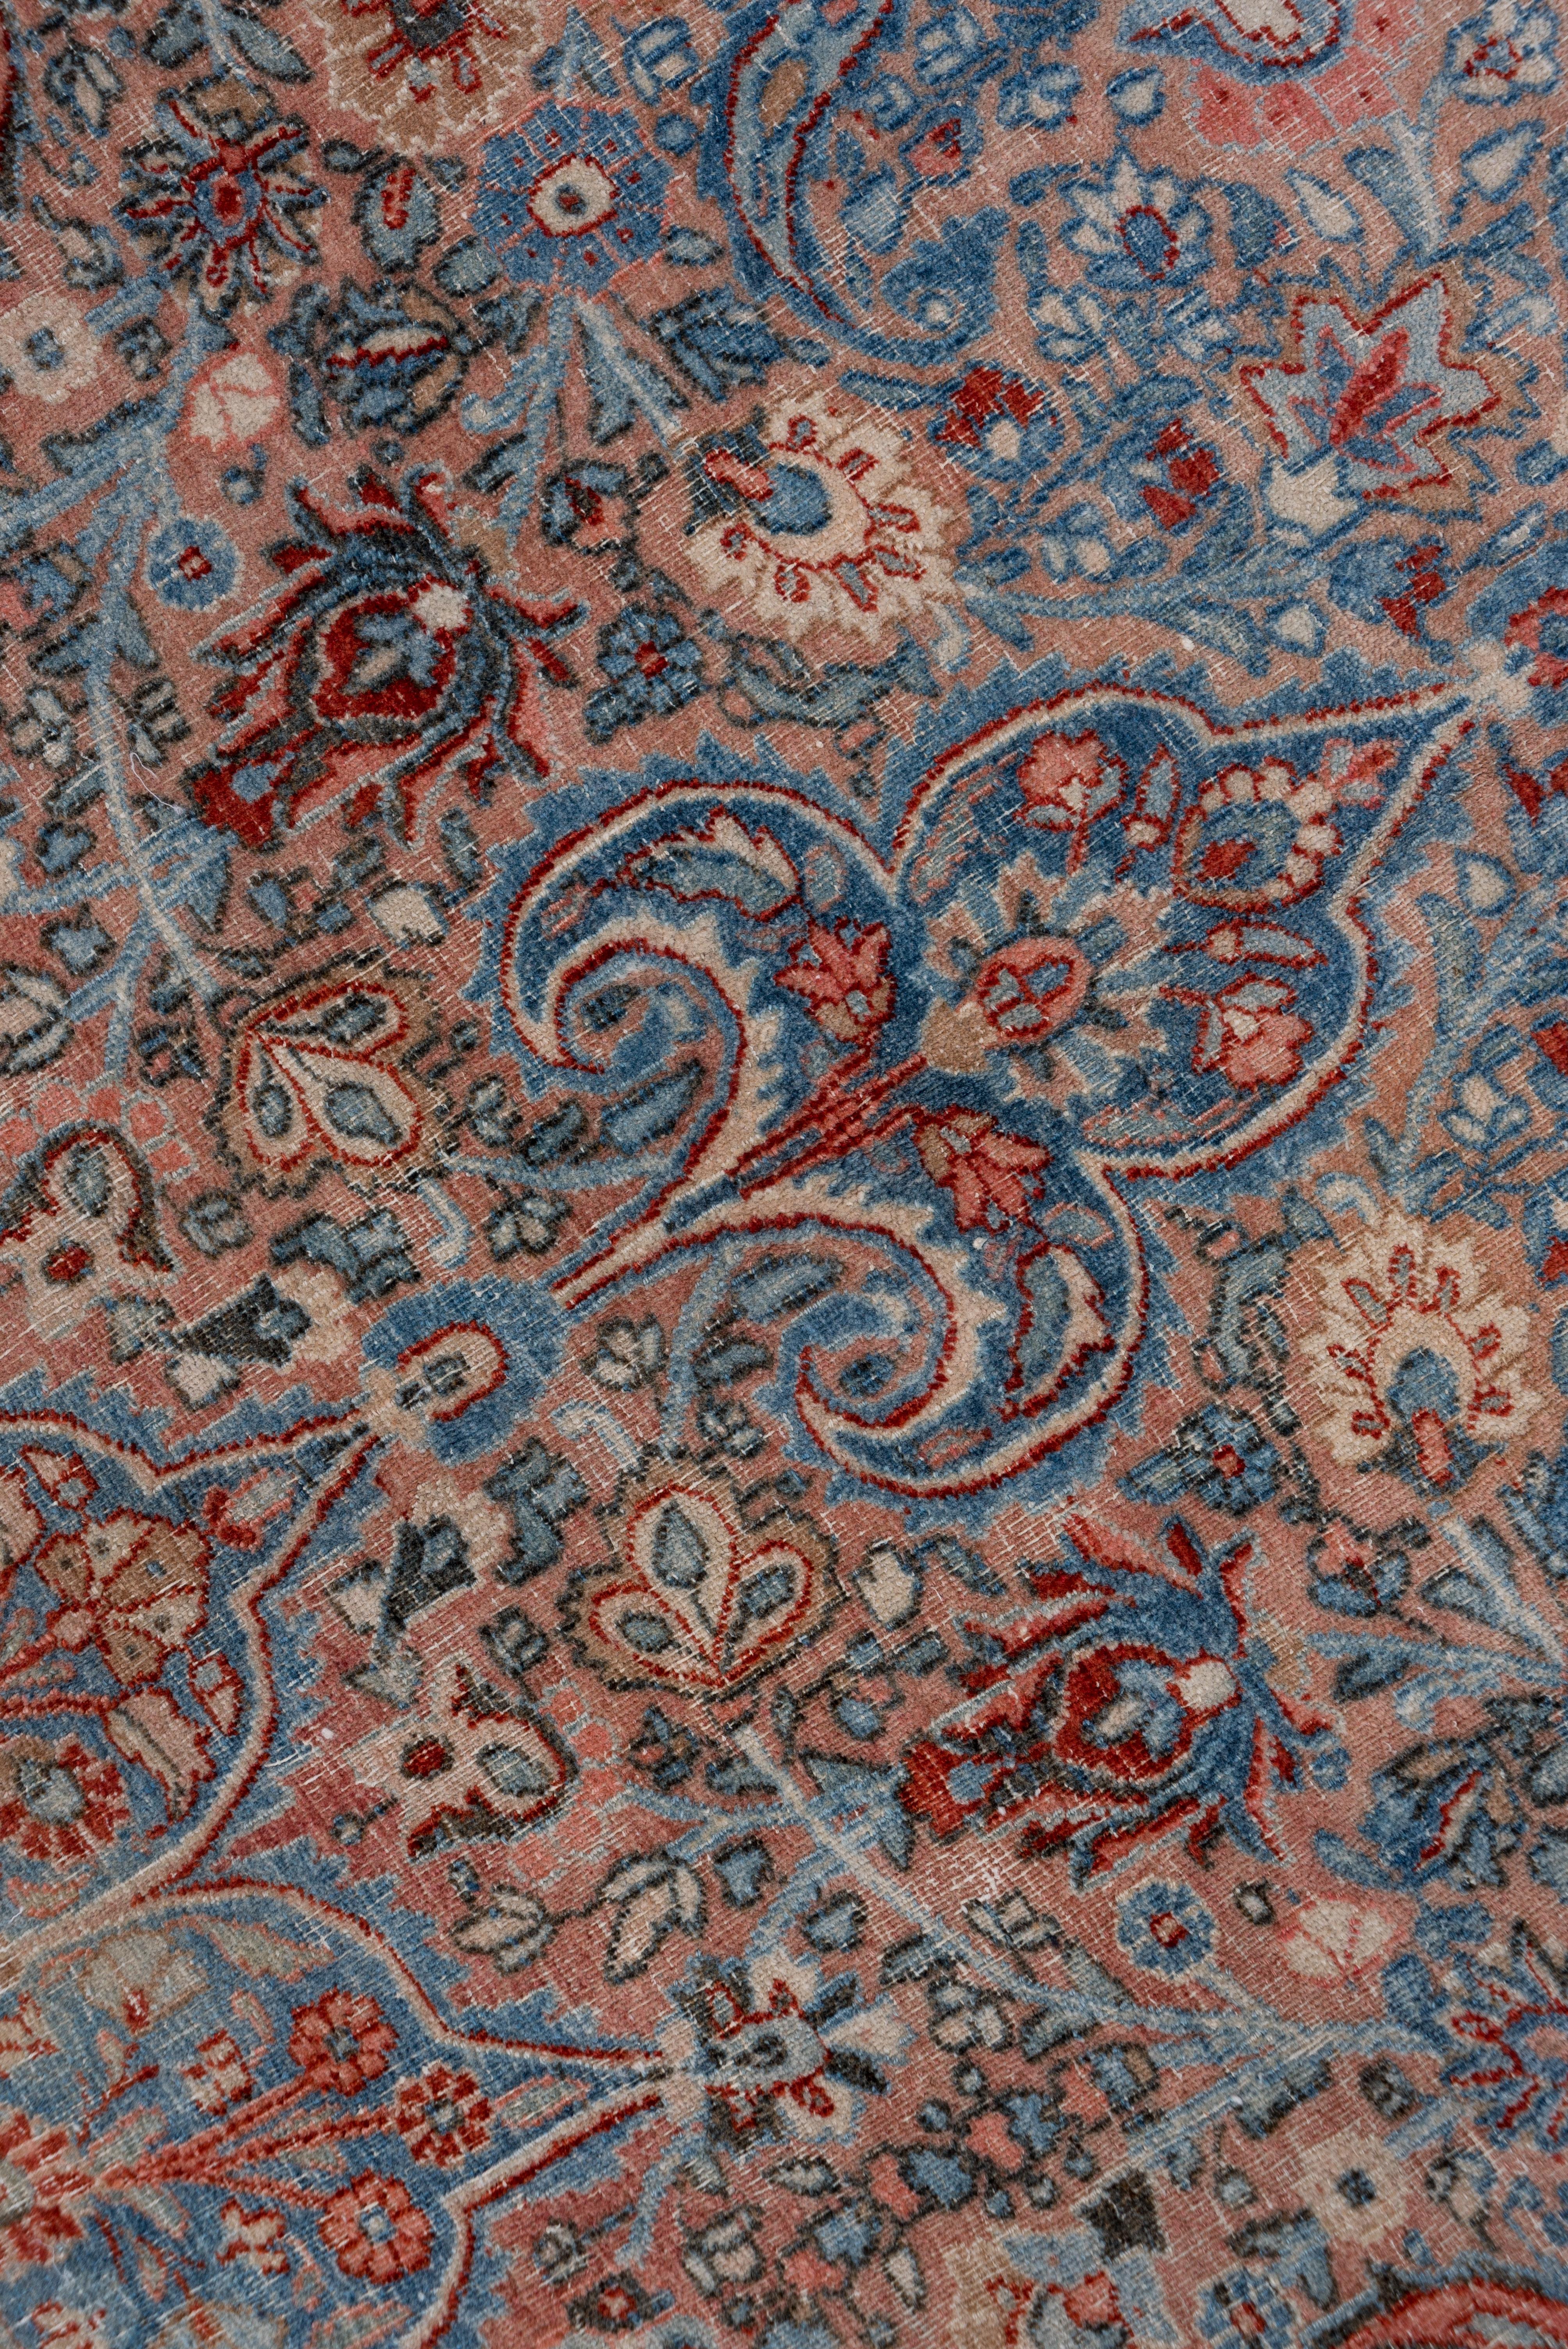 Wool Antique Persian Khorassan Carpet, Blue Tones, Pink Tones, Salmon Tones For Sale